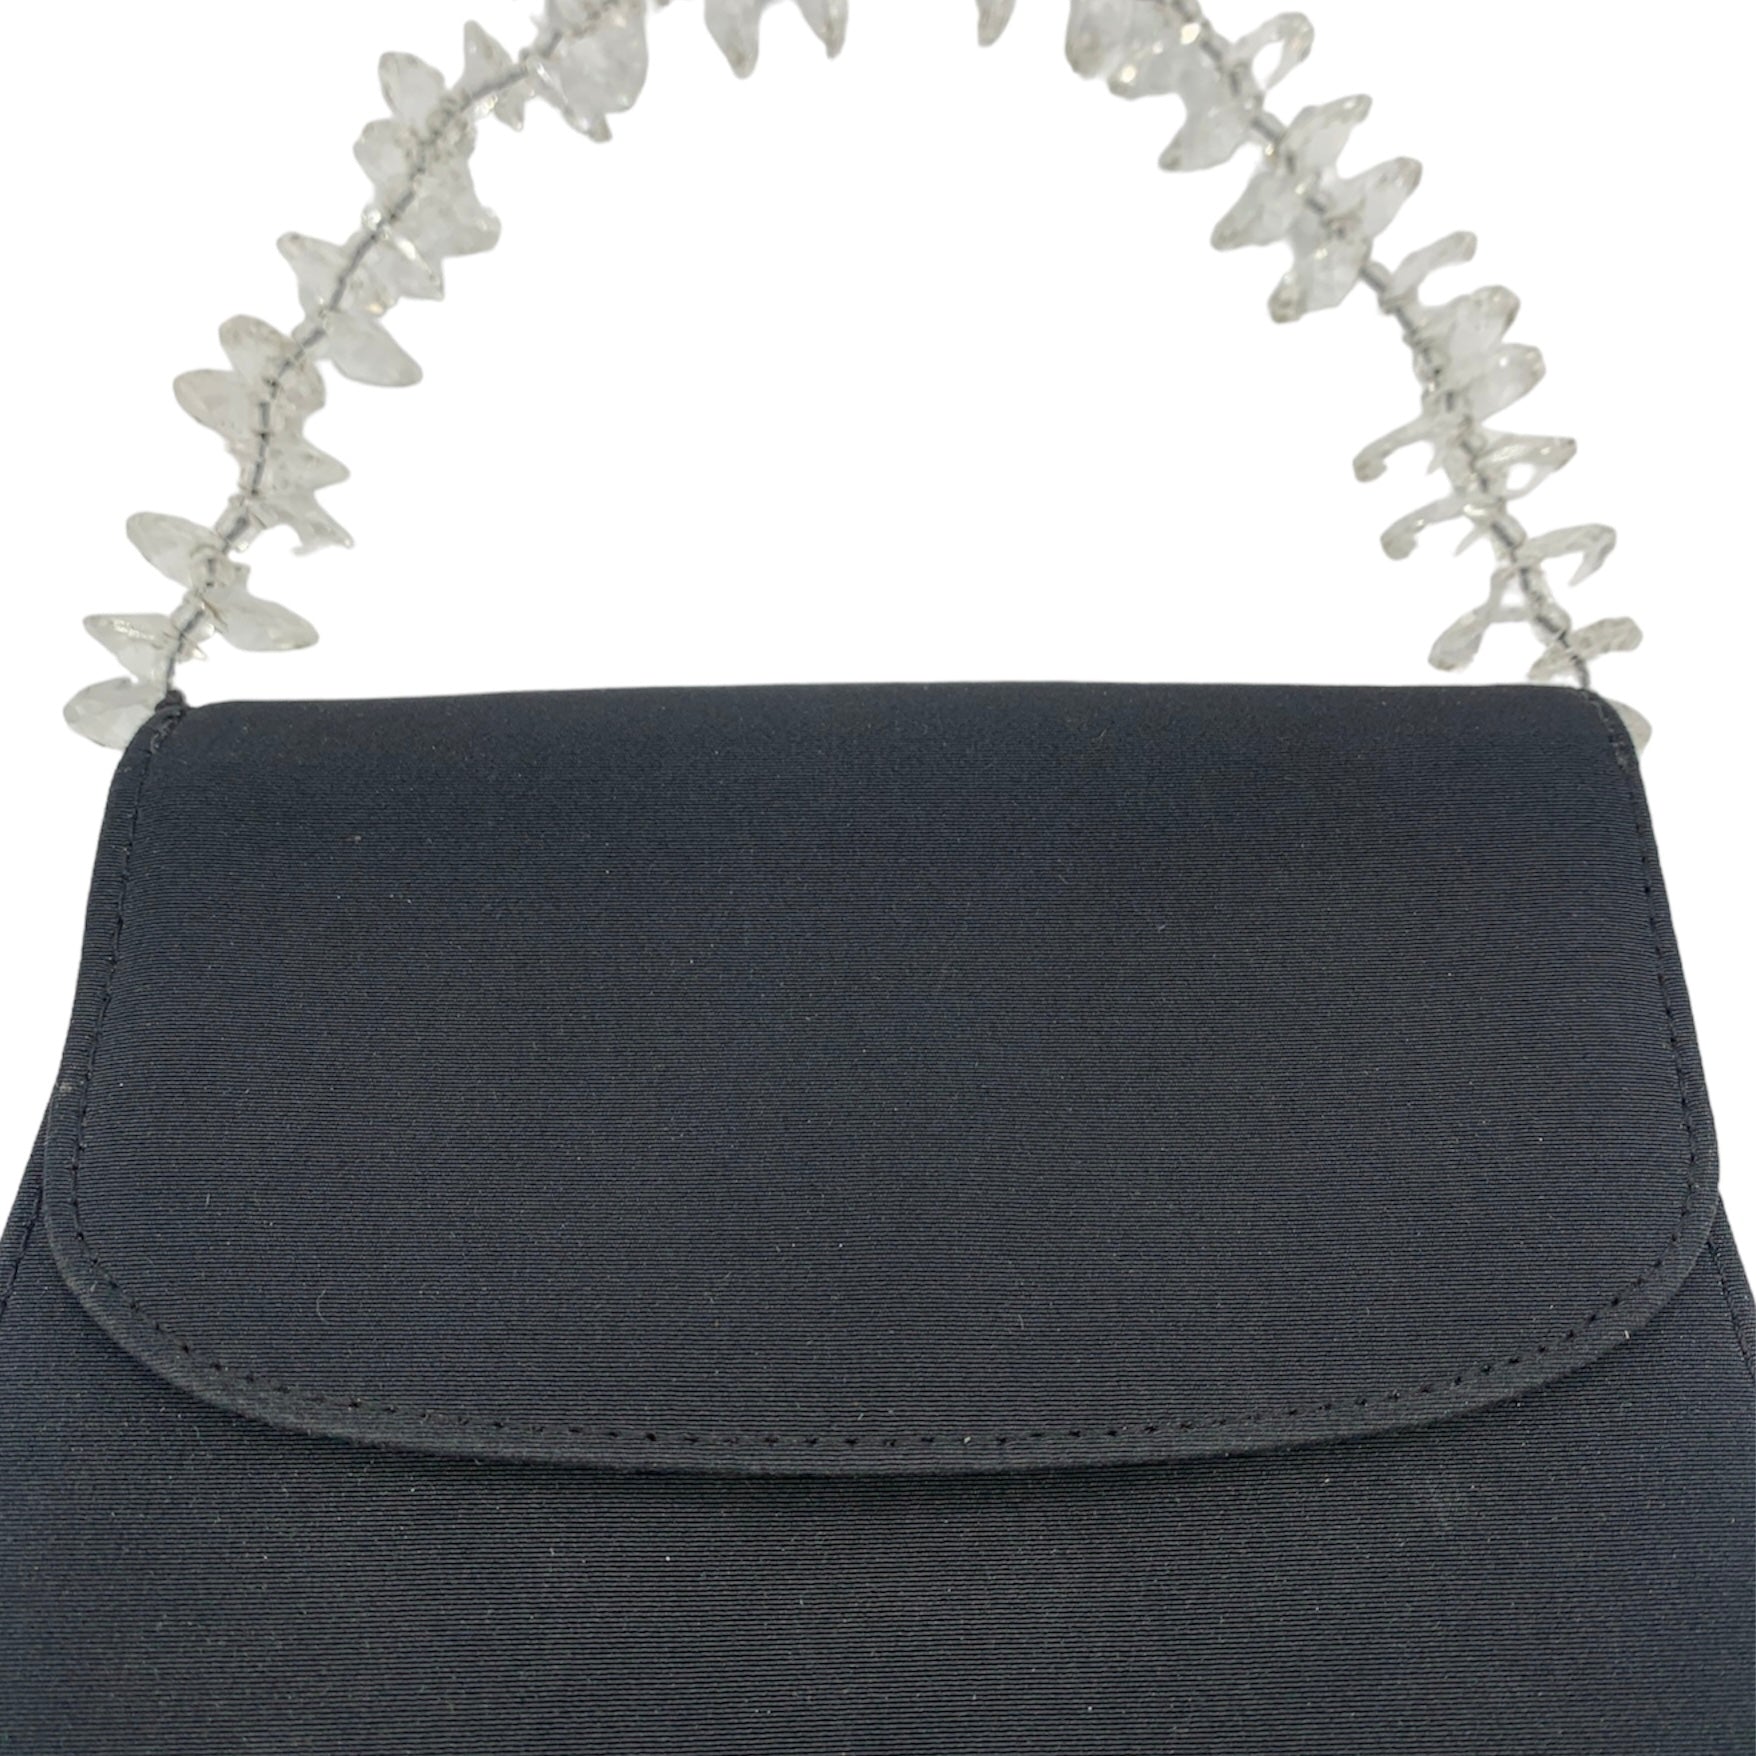 Casadei Black Satin Bag with Simulated Crystal Handle, close up